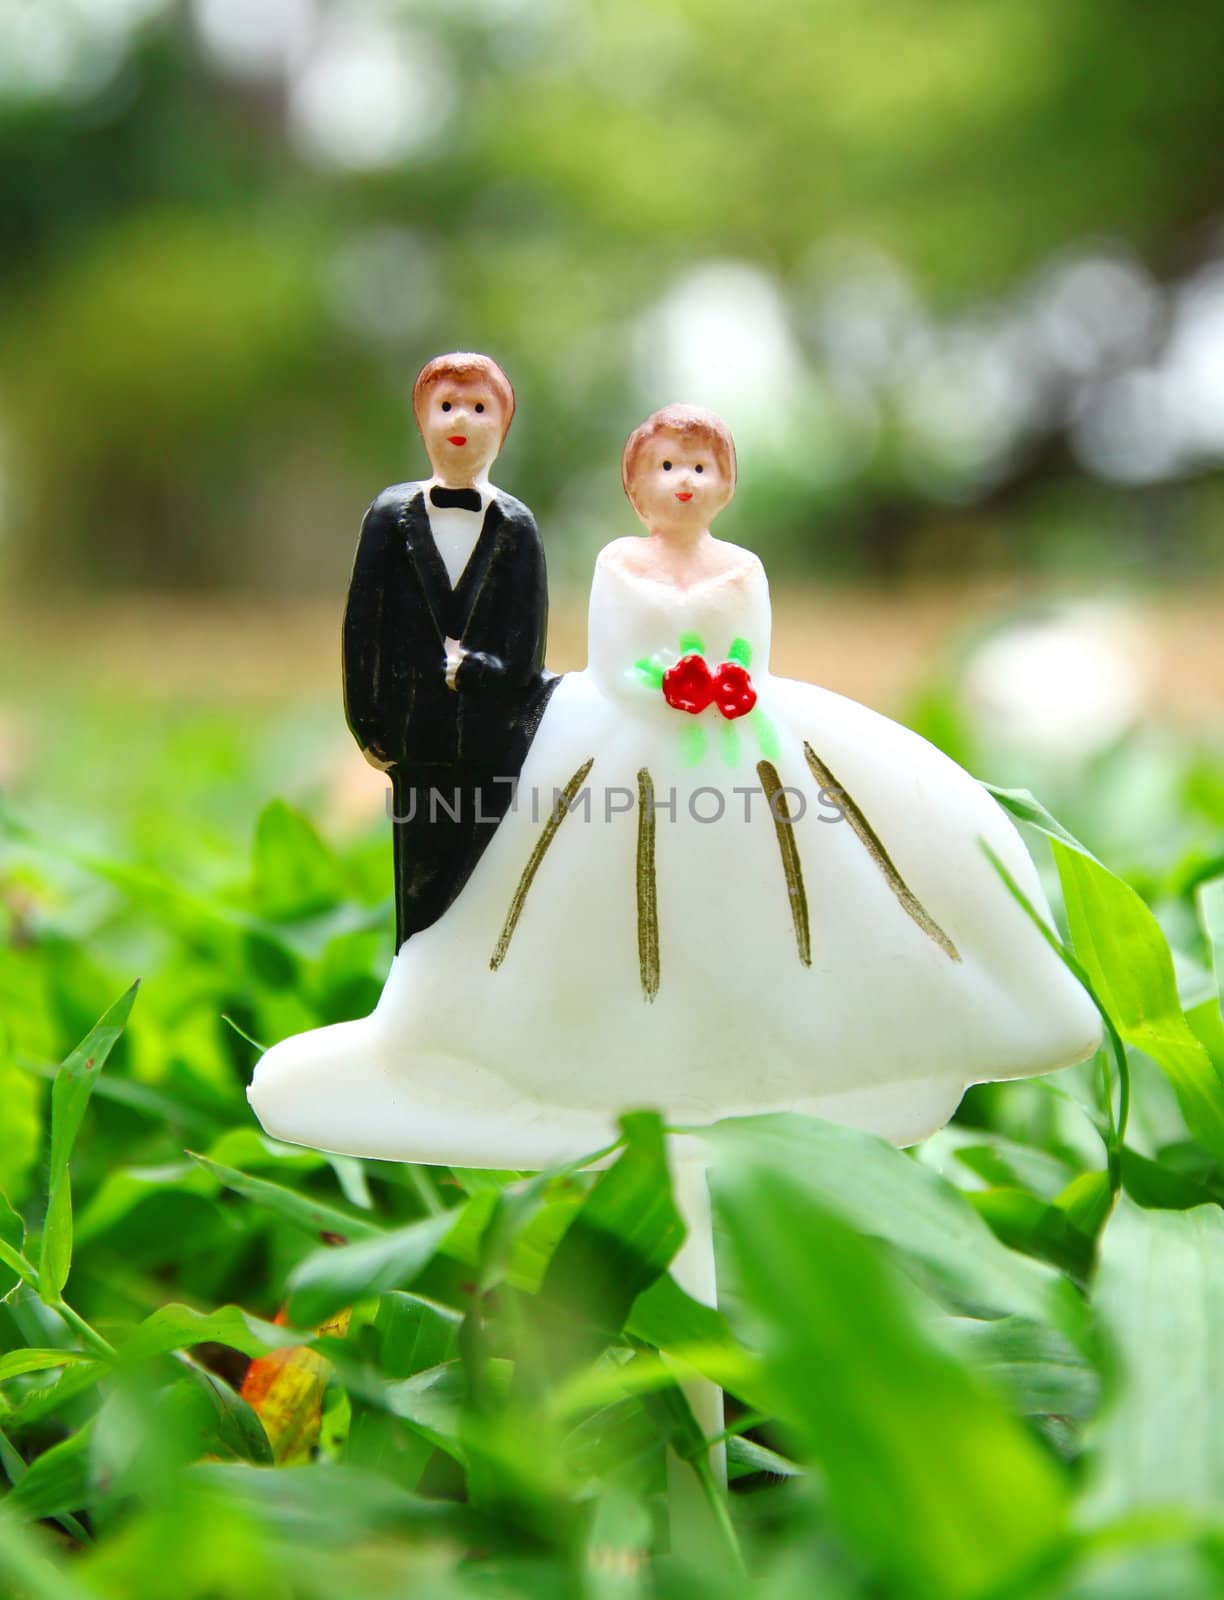 wedding couple doll on grass ground field by nuchylee